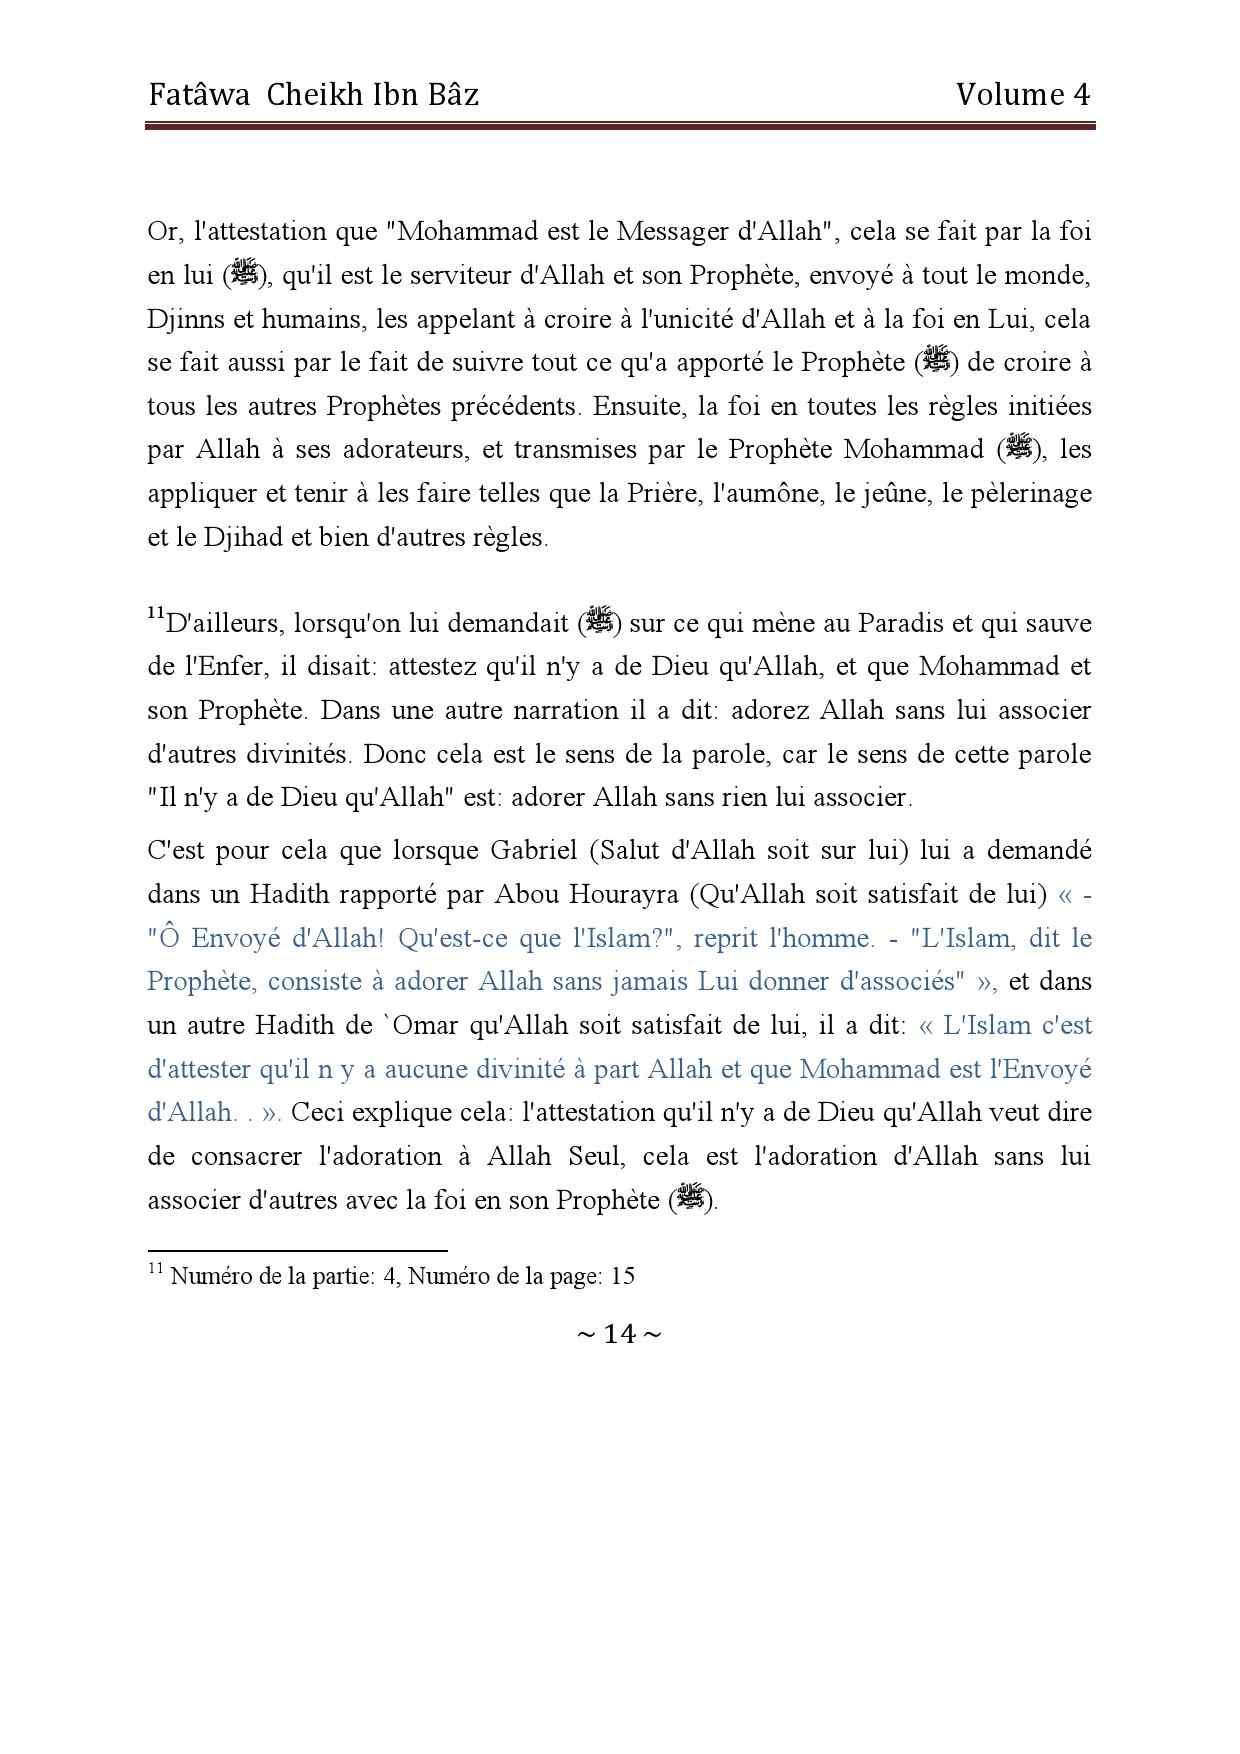 Fatawa_ibnBaz_Volume_4.pdf, 621-Sayfa 